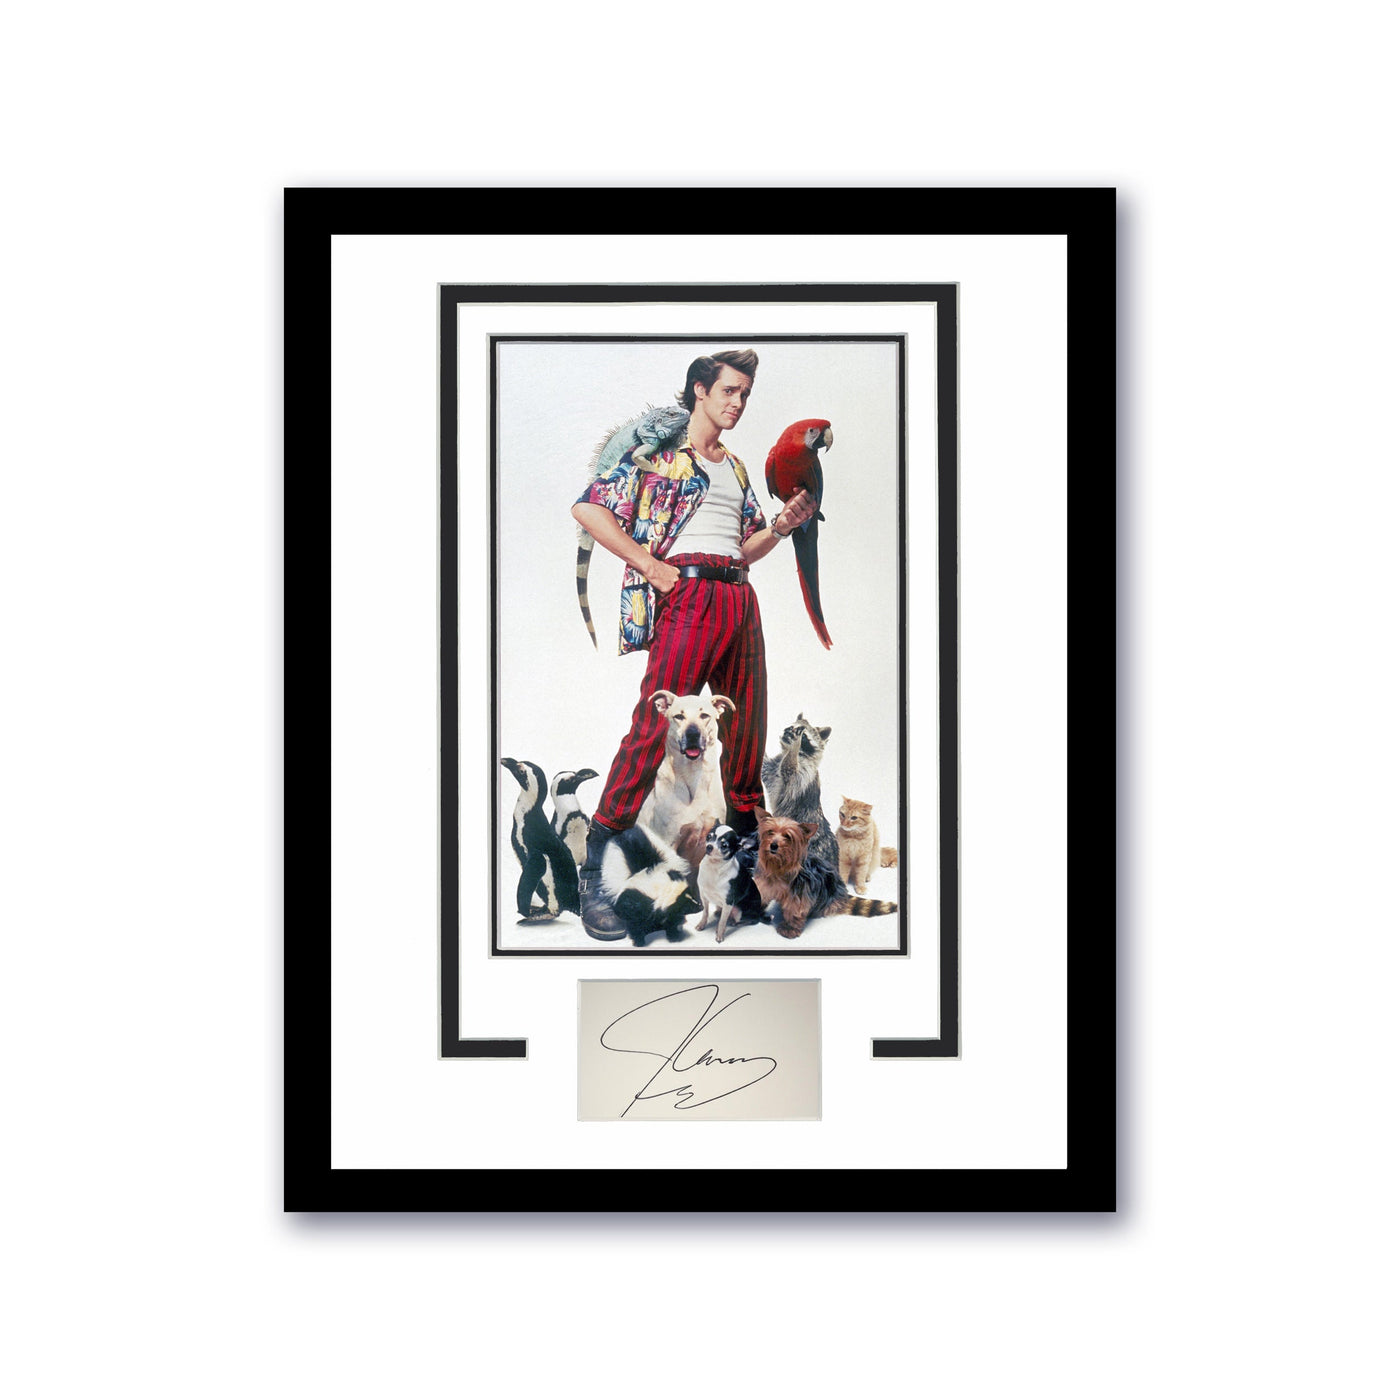 Ace Ventura Jim Carrey Autographed Signed 11x14 Framed Poster Photo ACOA